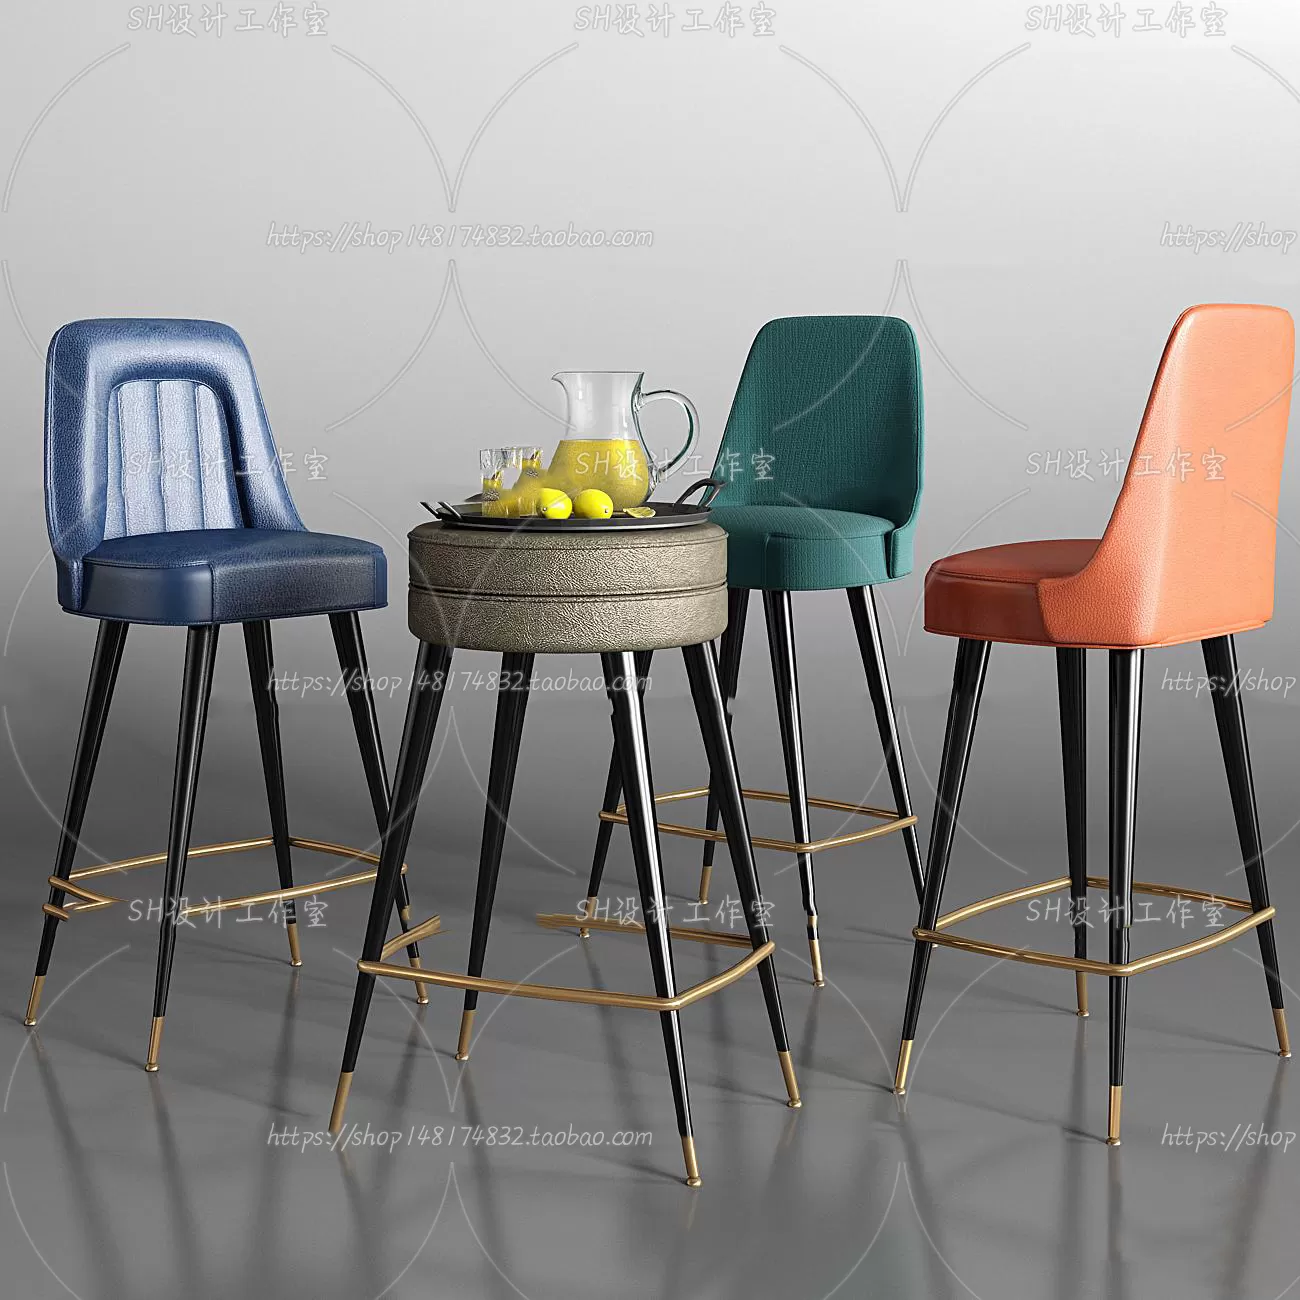 Bar Chair 3D Models – 2157